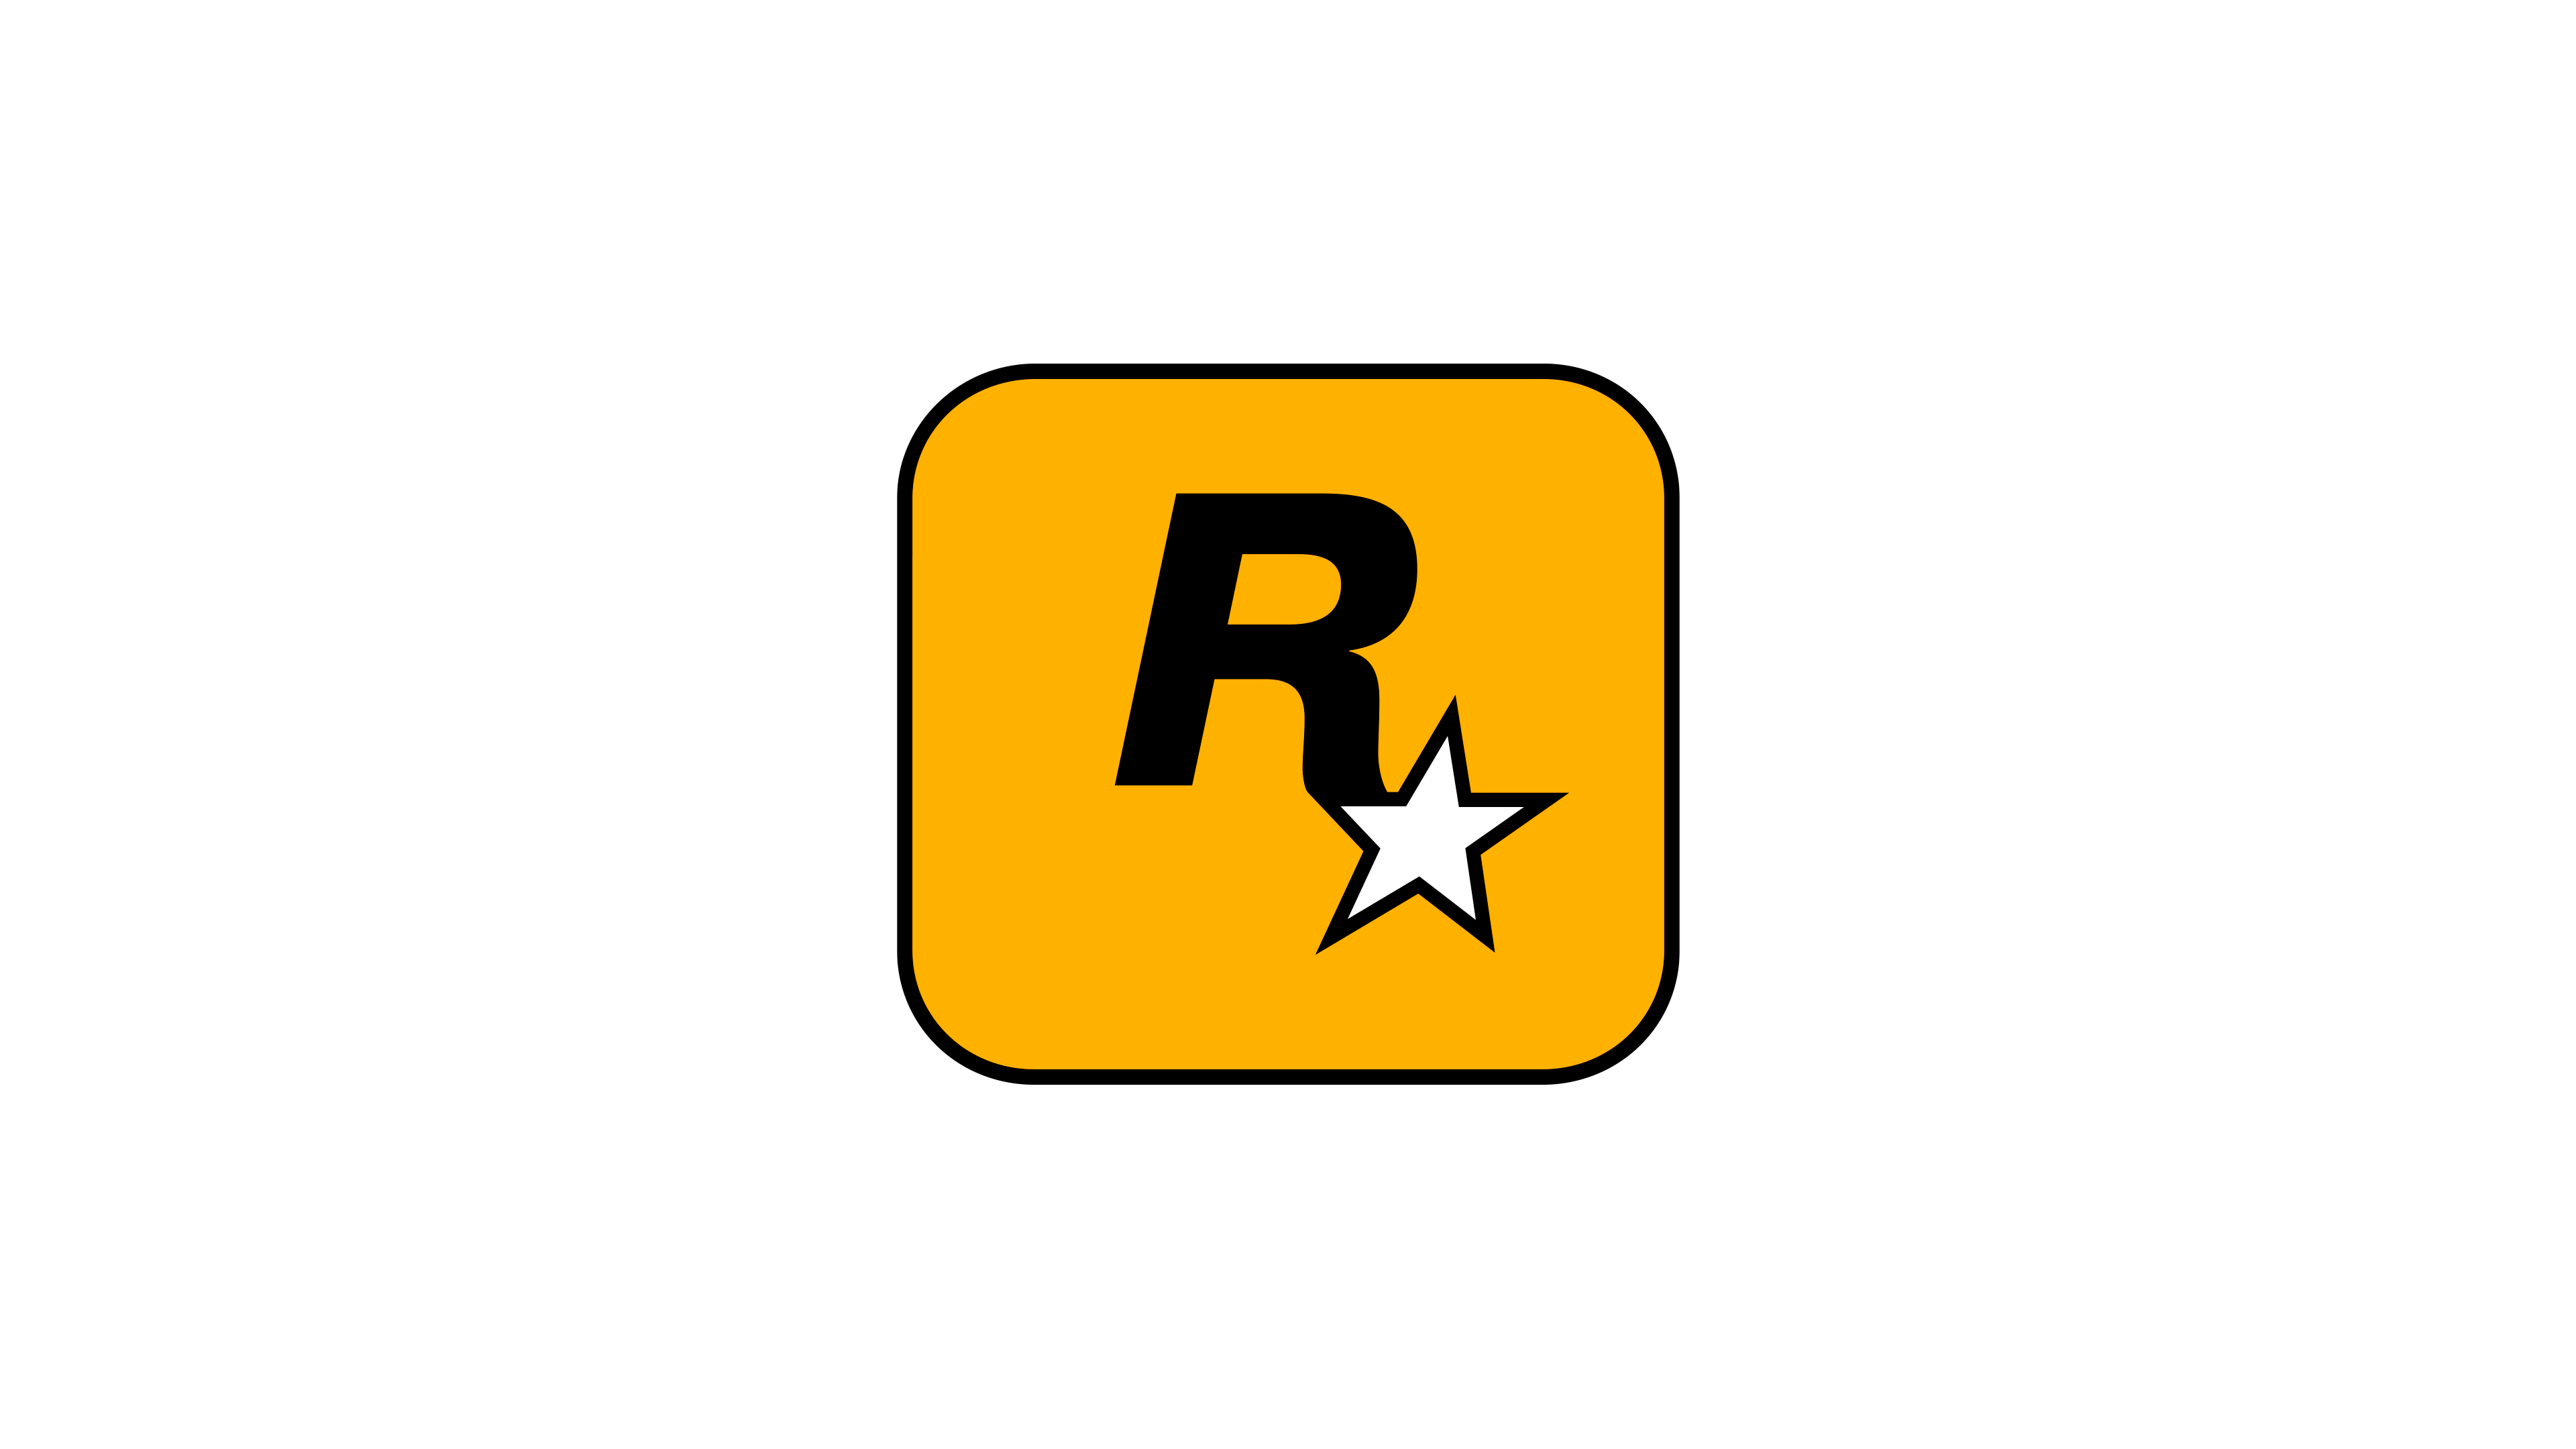 Rockstar Games on X: A message from Rockstar Games